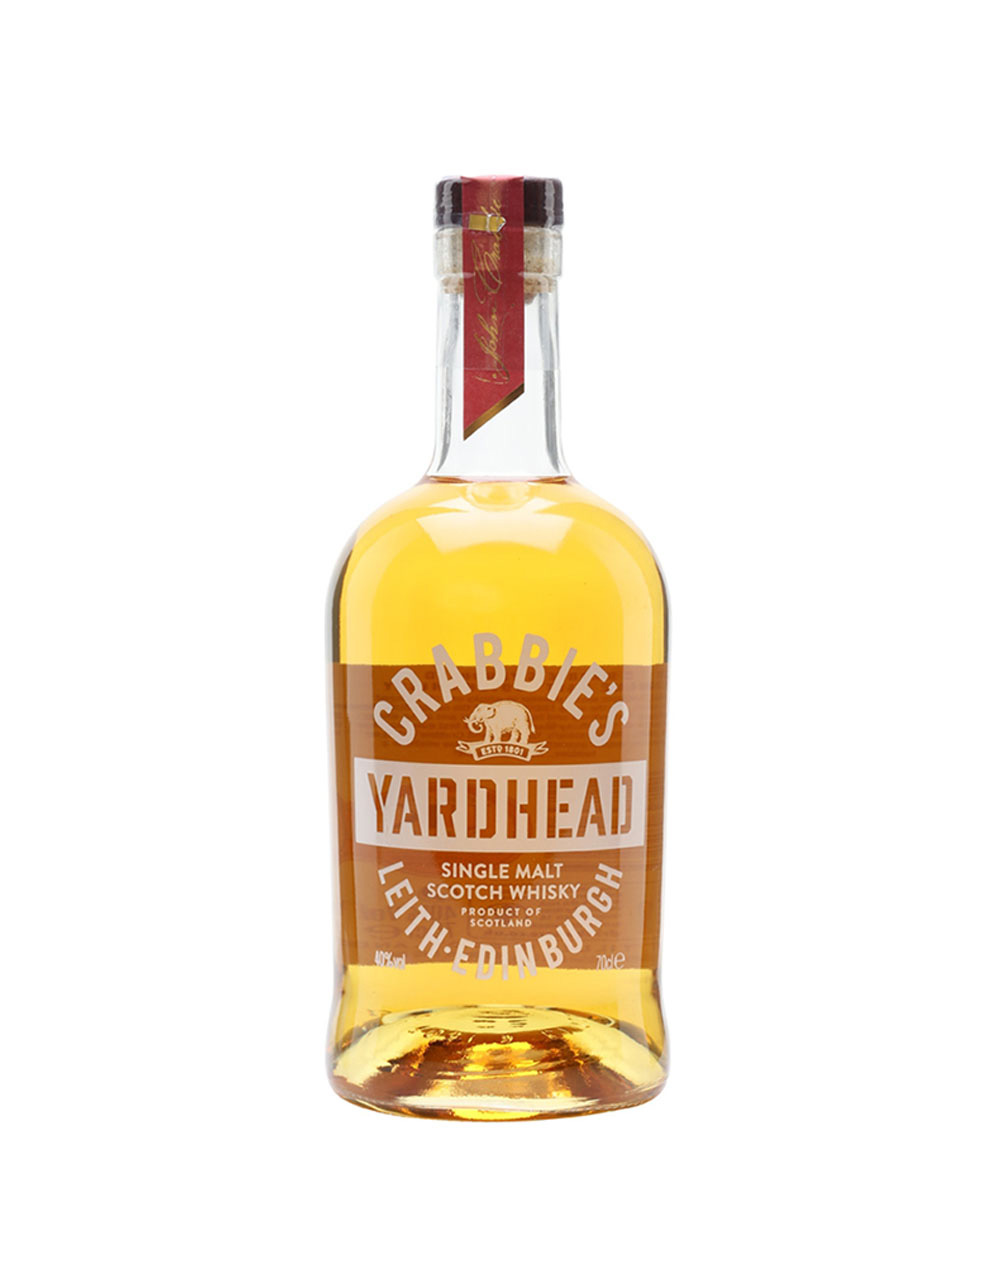 Crabbies Yardhead Single Malt Scotch Whisky